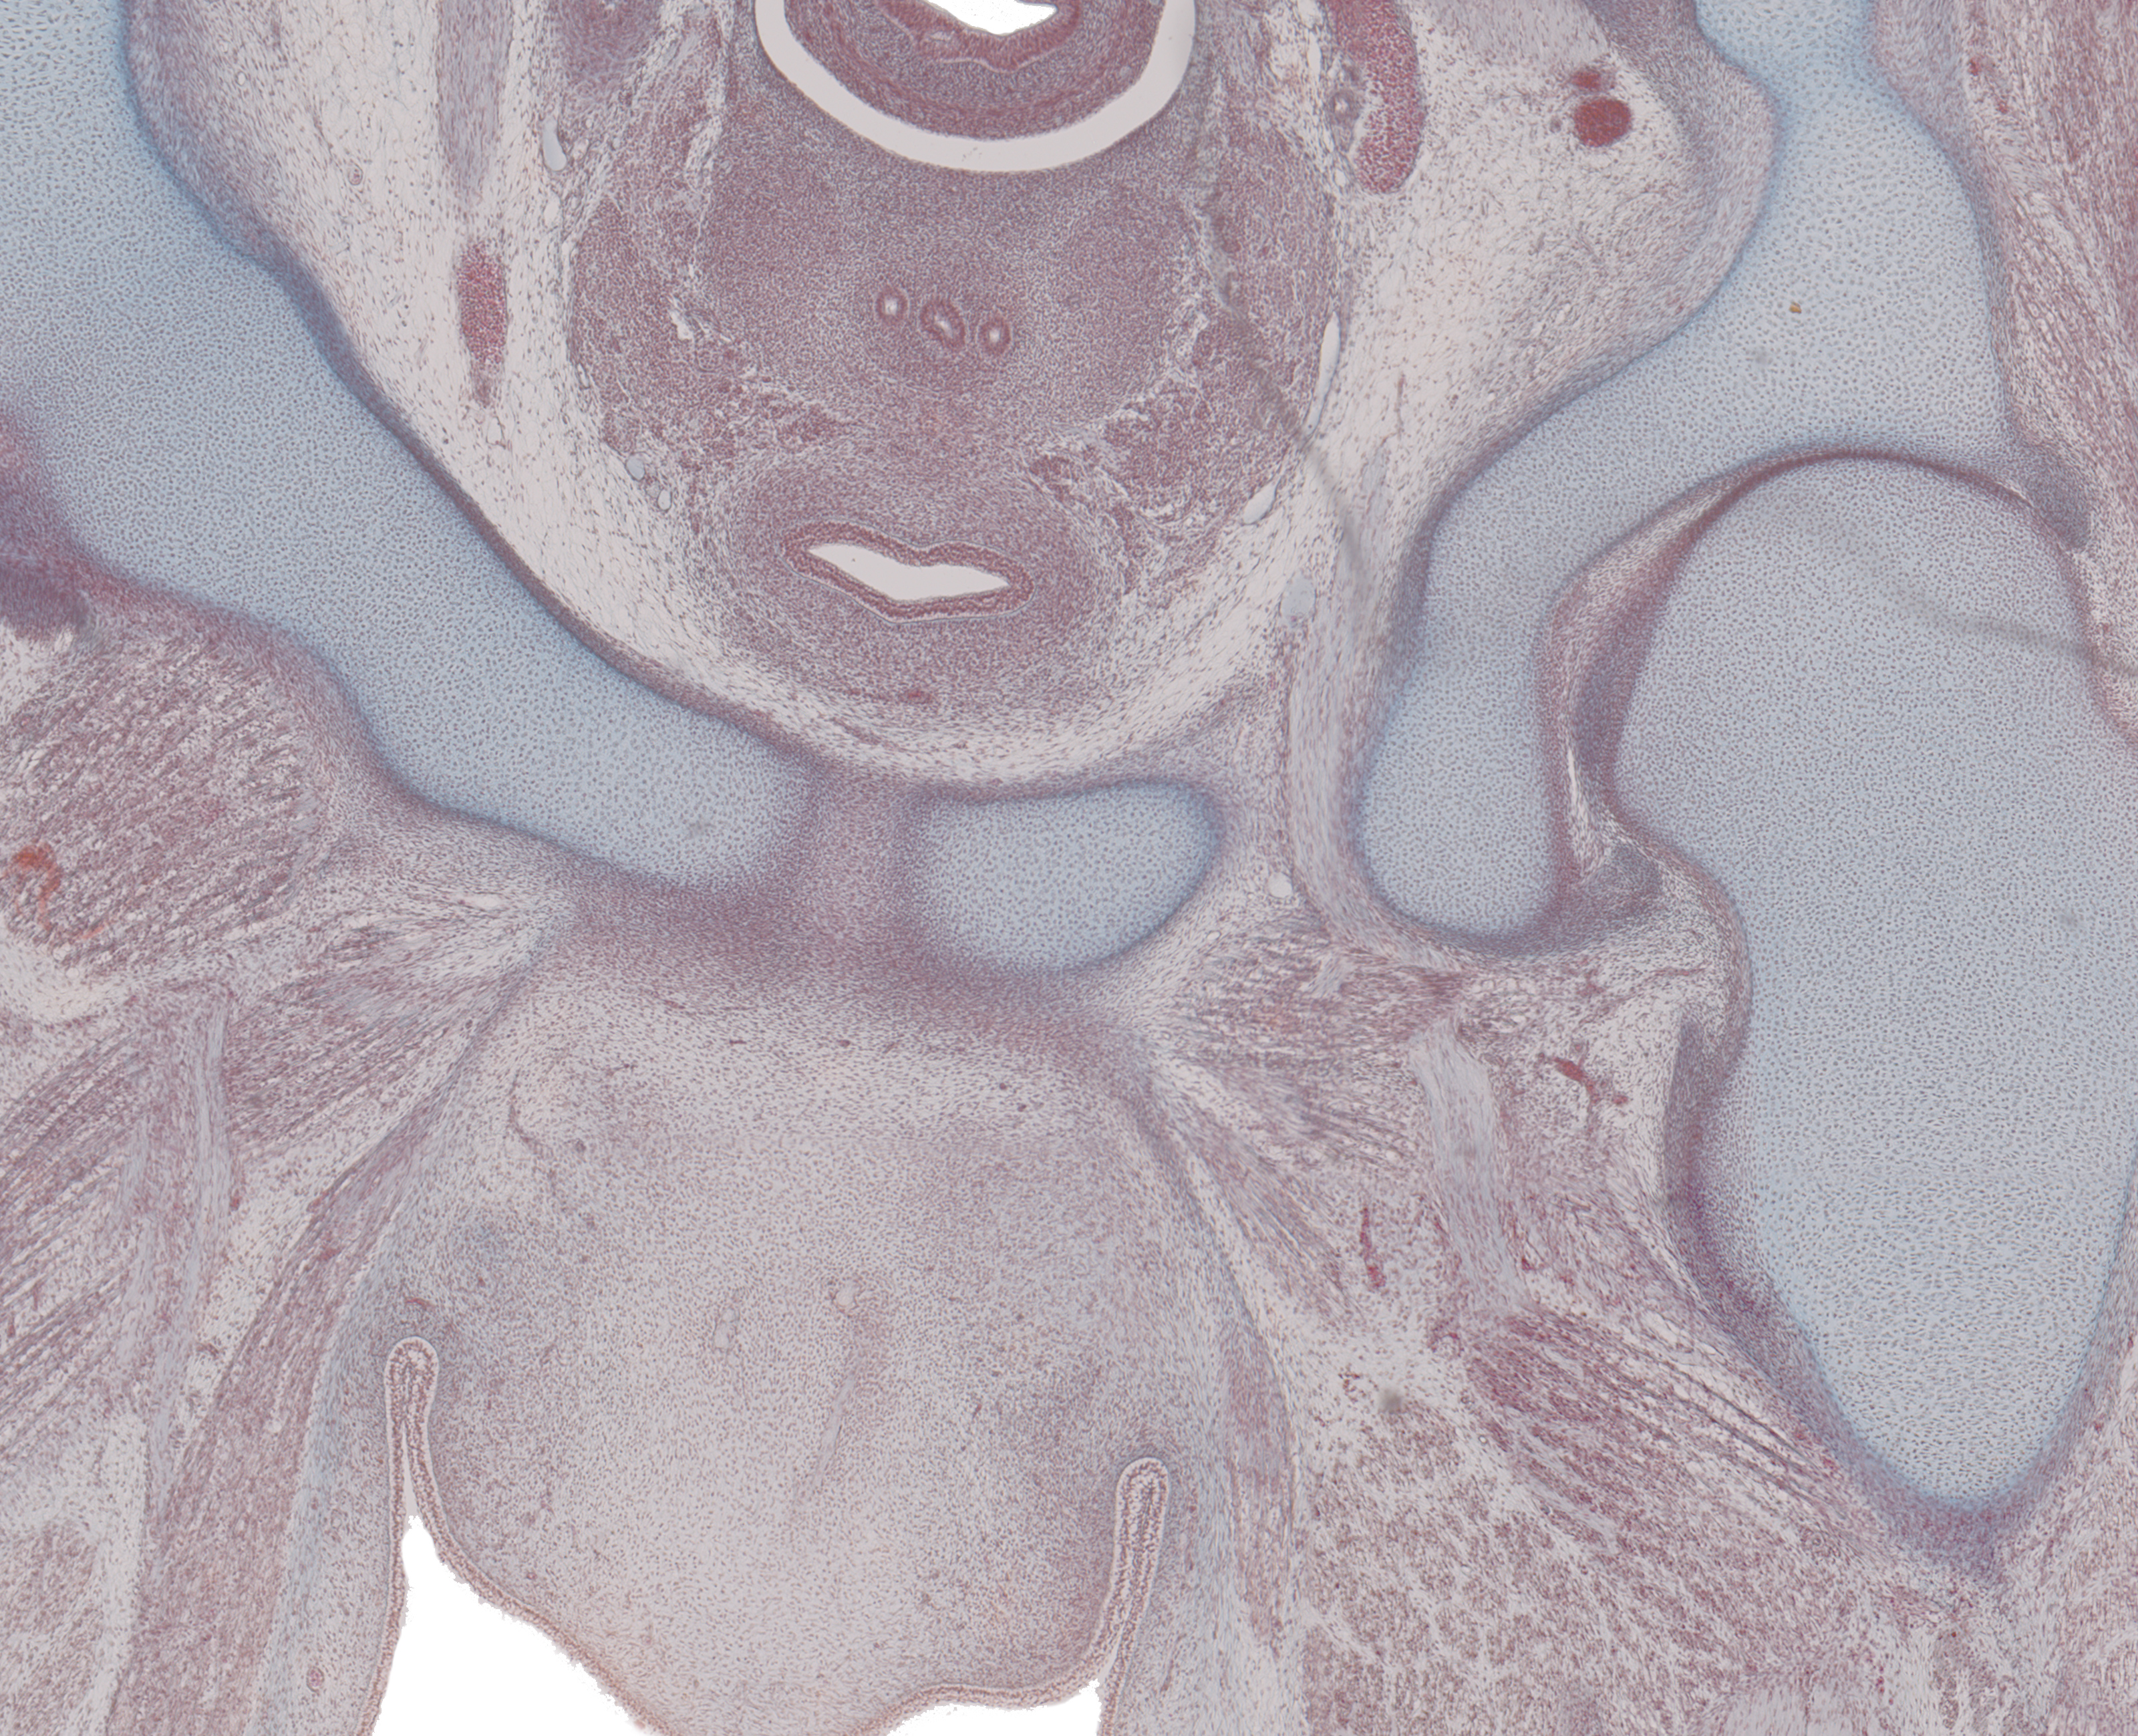 Ureter, Gubernaculum Testis in Scrotal Fold, and Obturator Canal